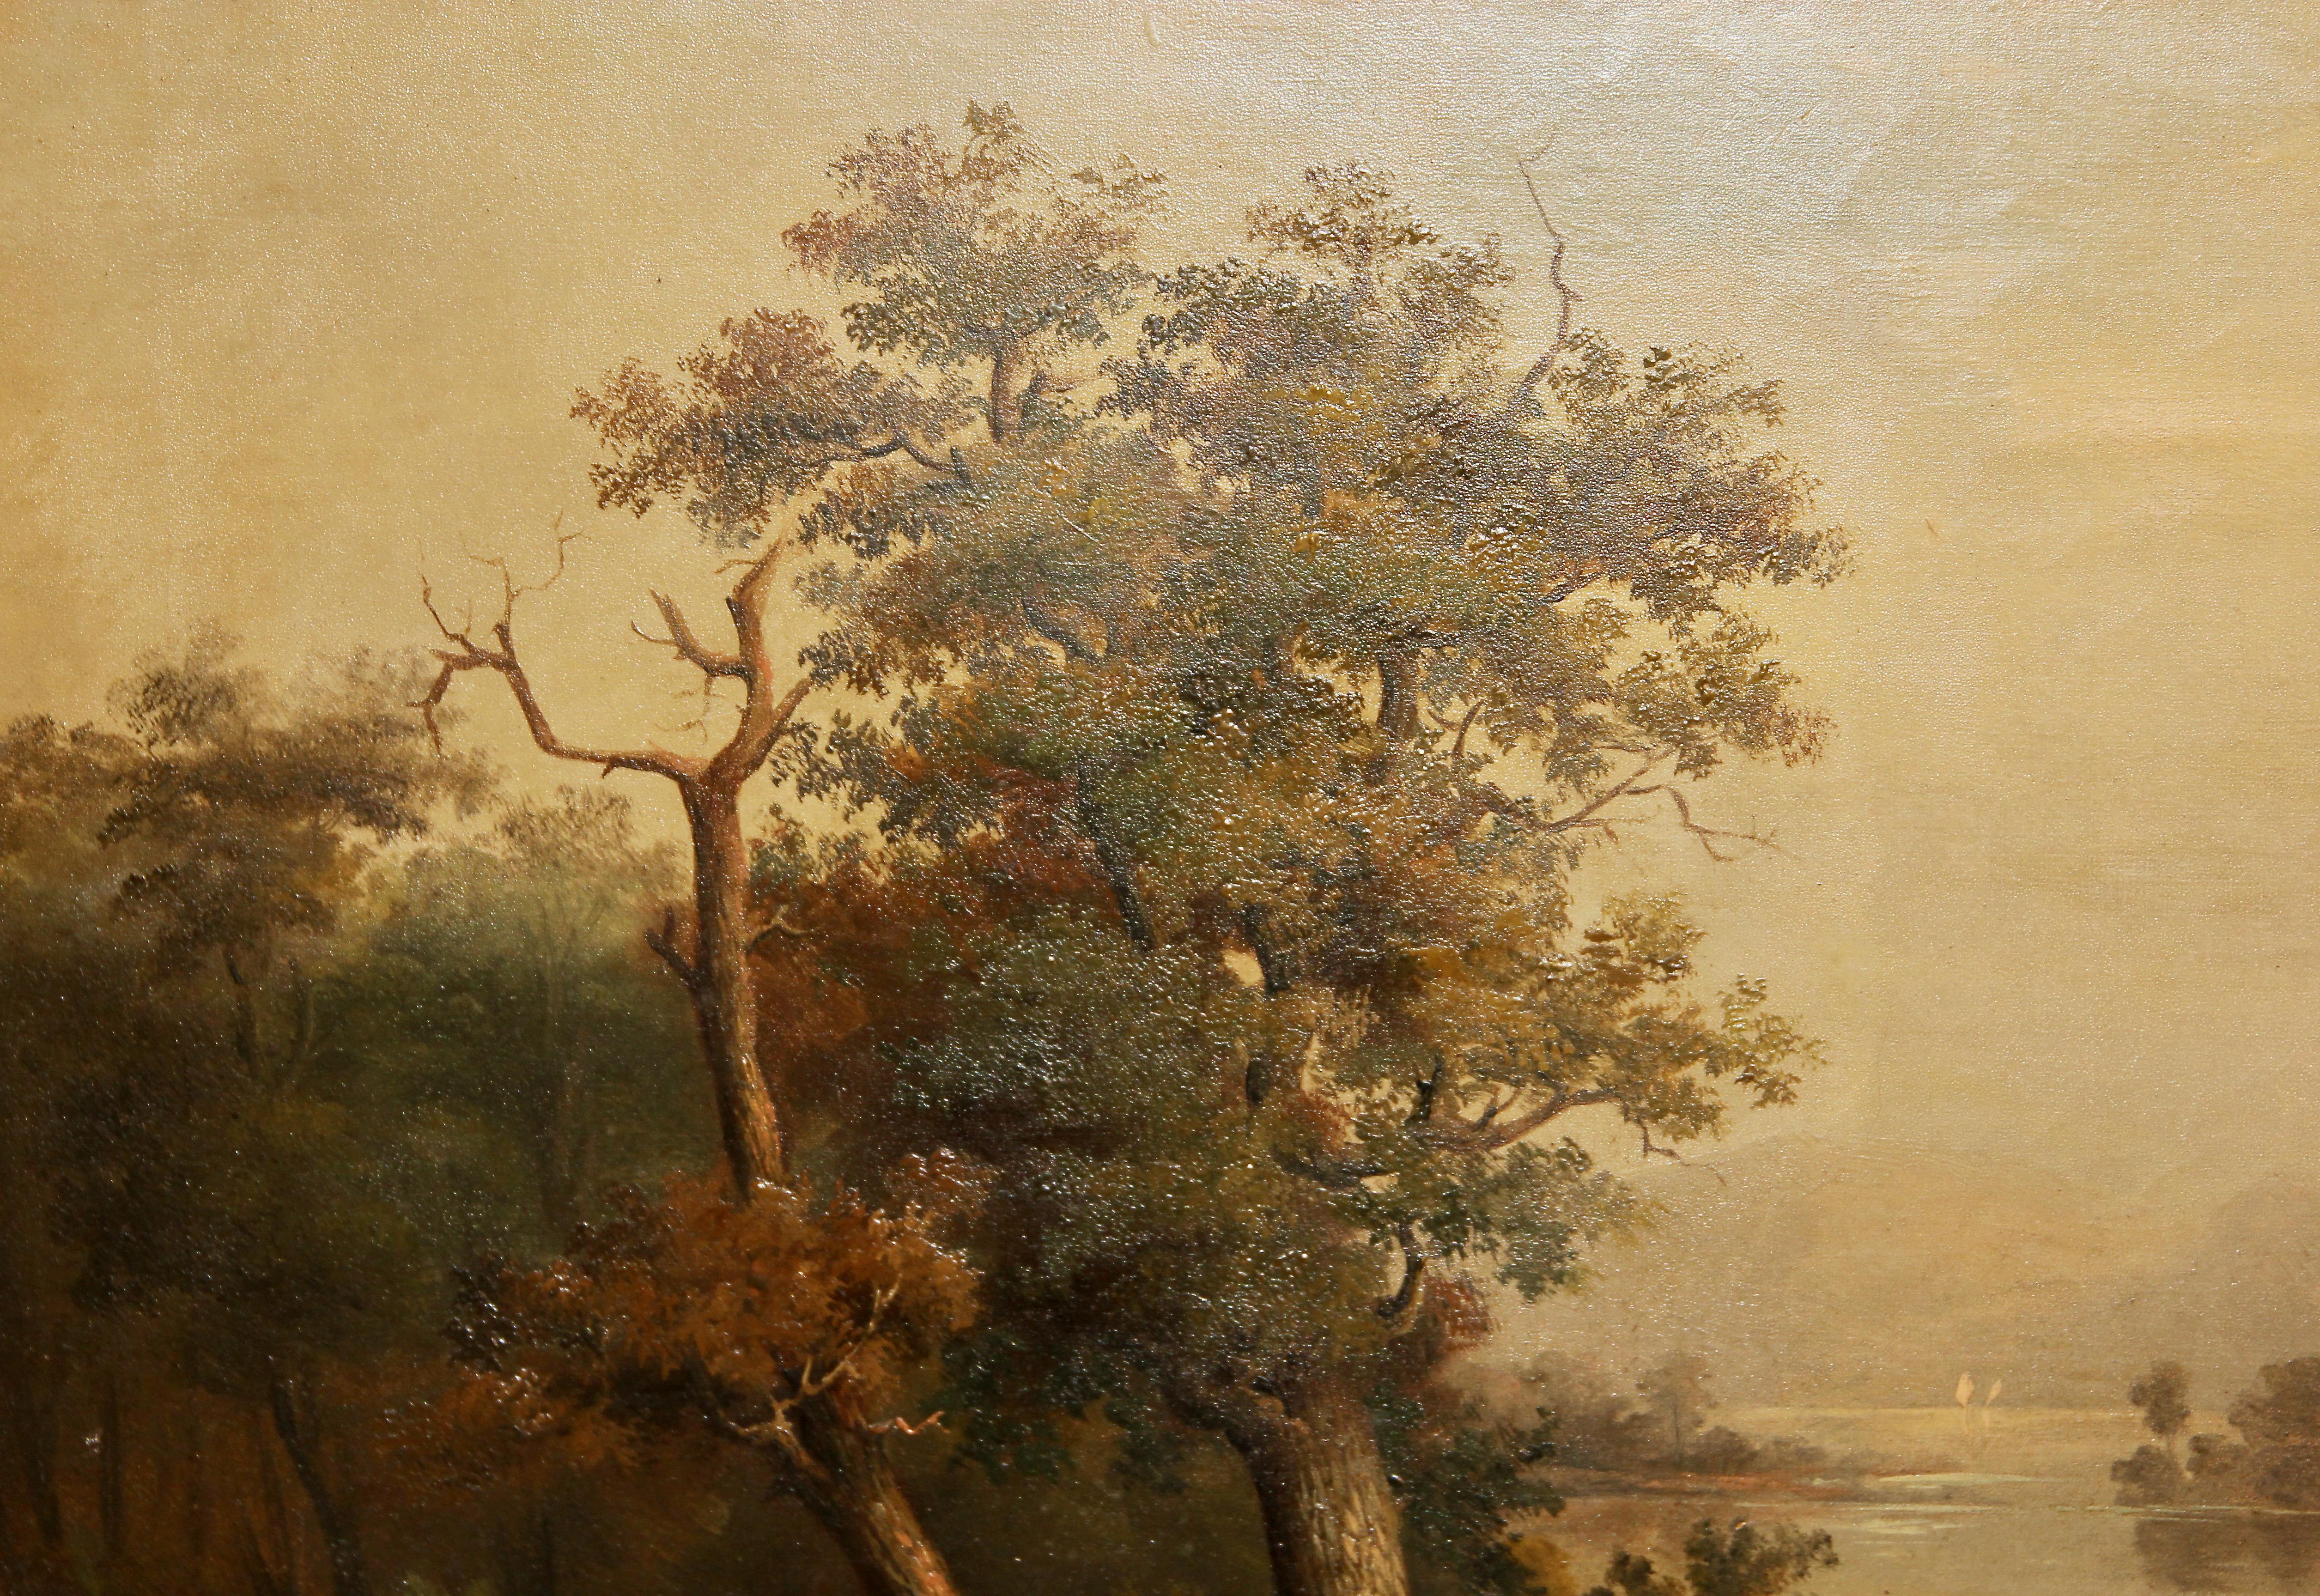 19th century romantic landscape painting